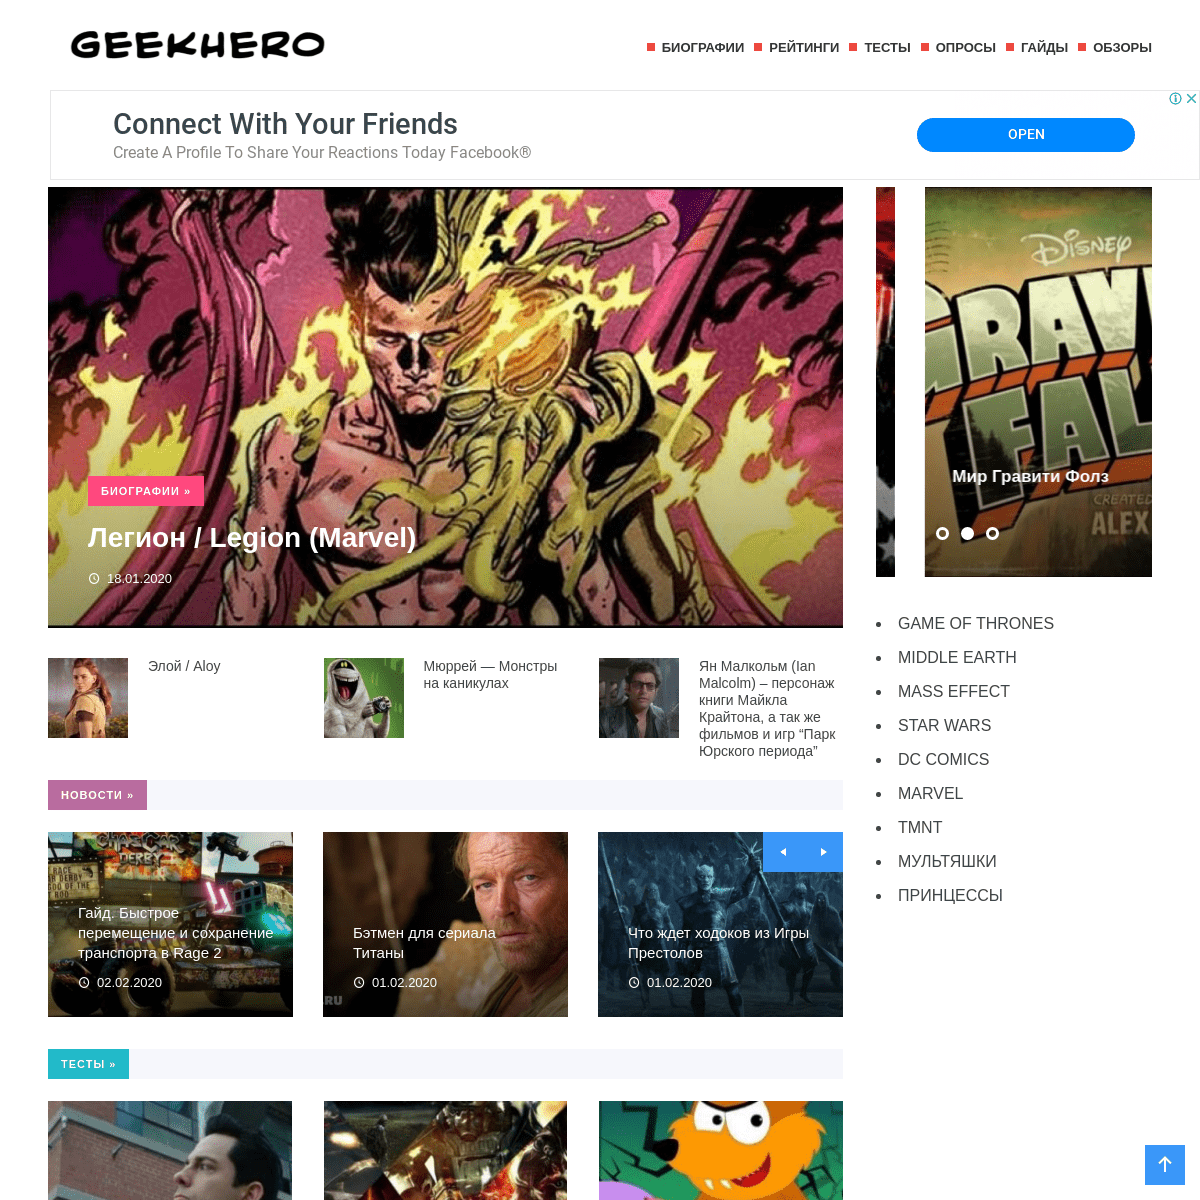 A complete backup of geekhero.ru